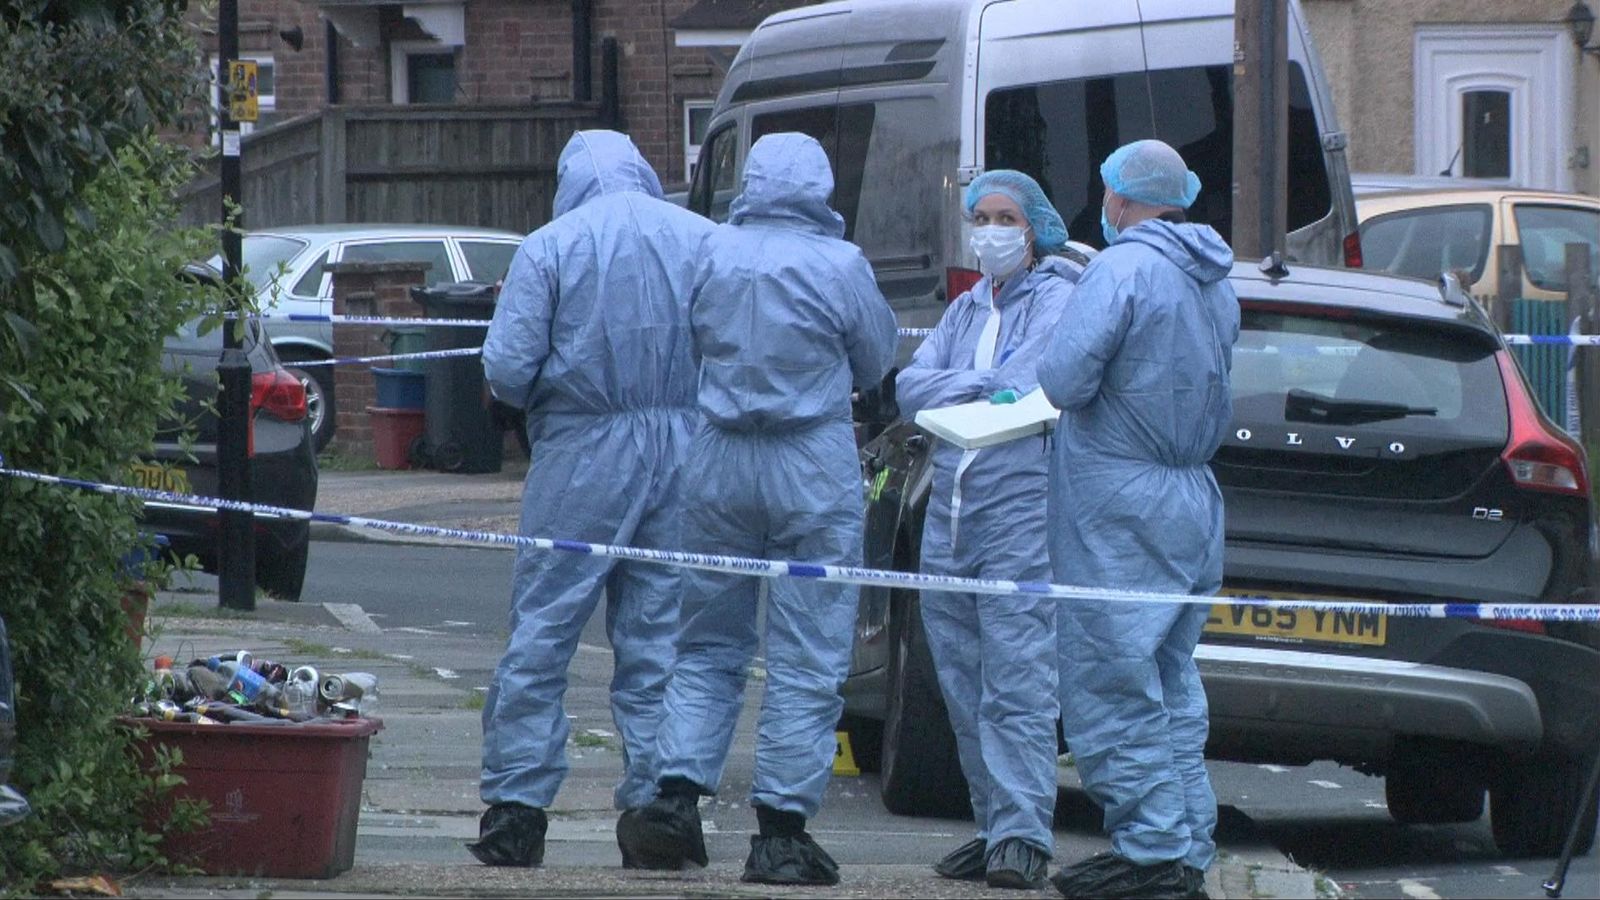 Ten people arrested for murder after man dies in west London